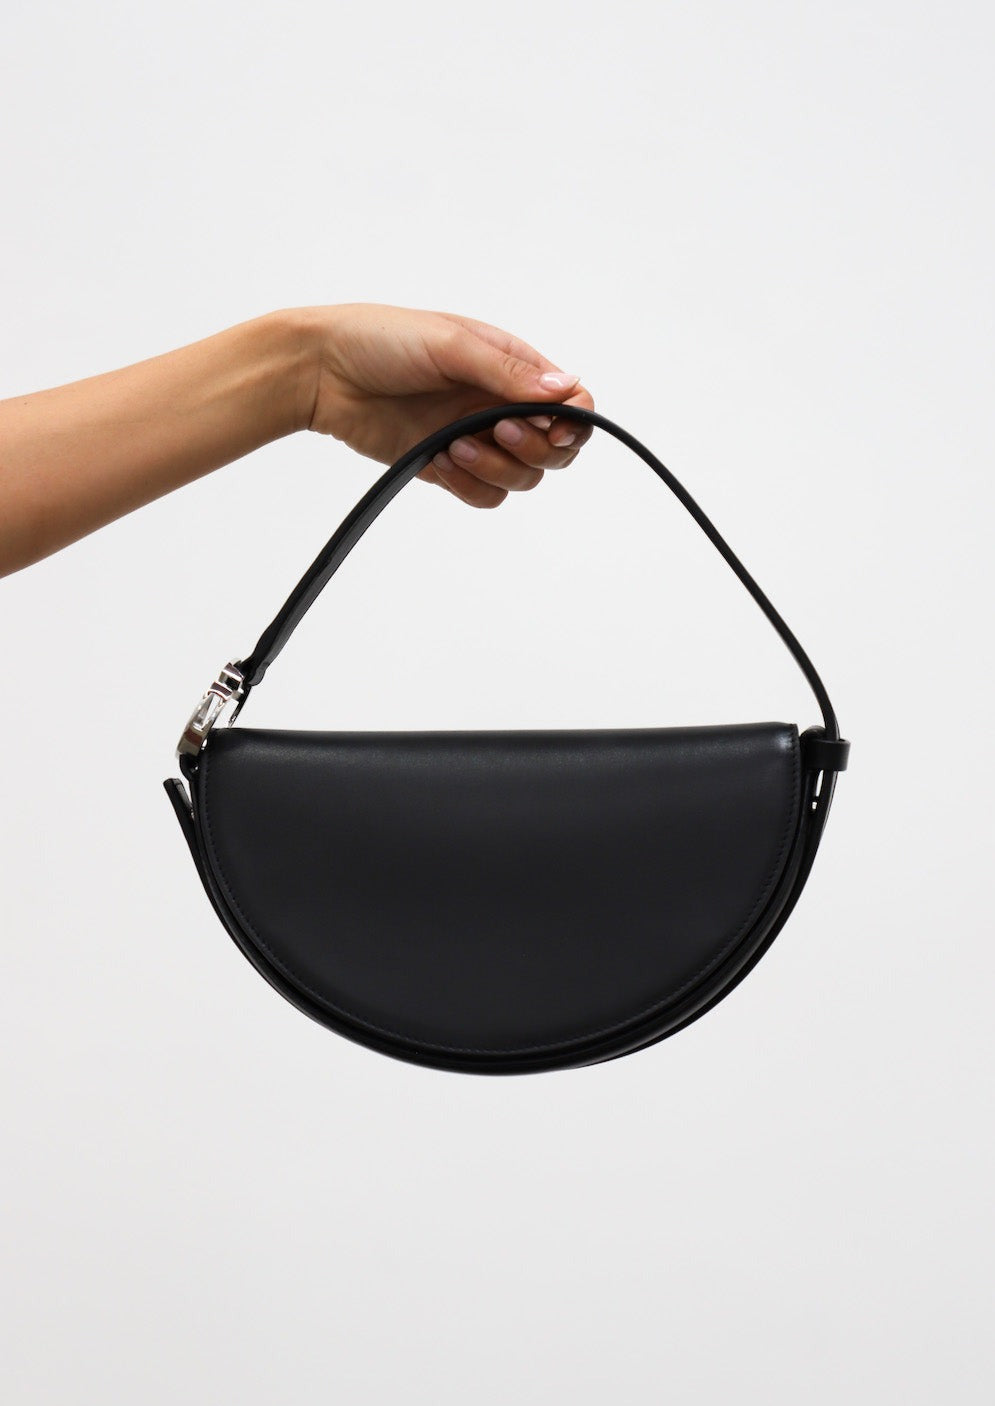 Dooz black leather eclipse celestial astrology handbag personal womens accessory